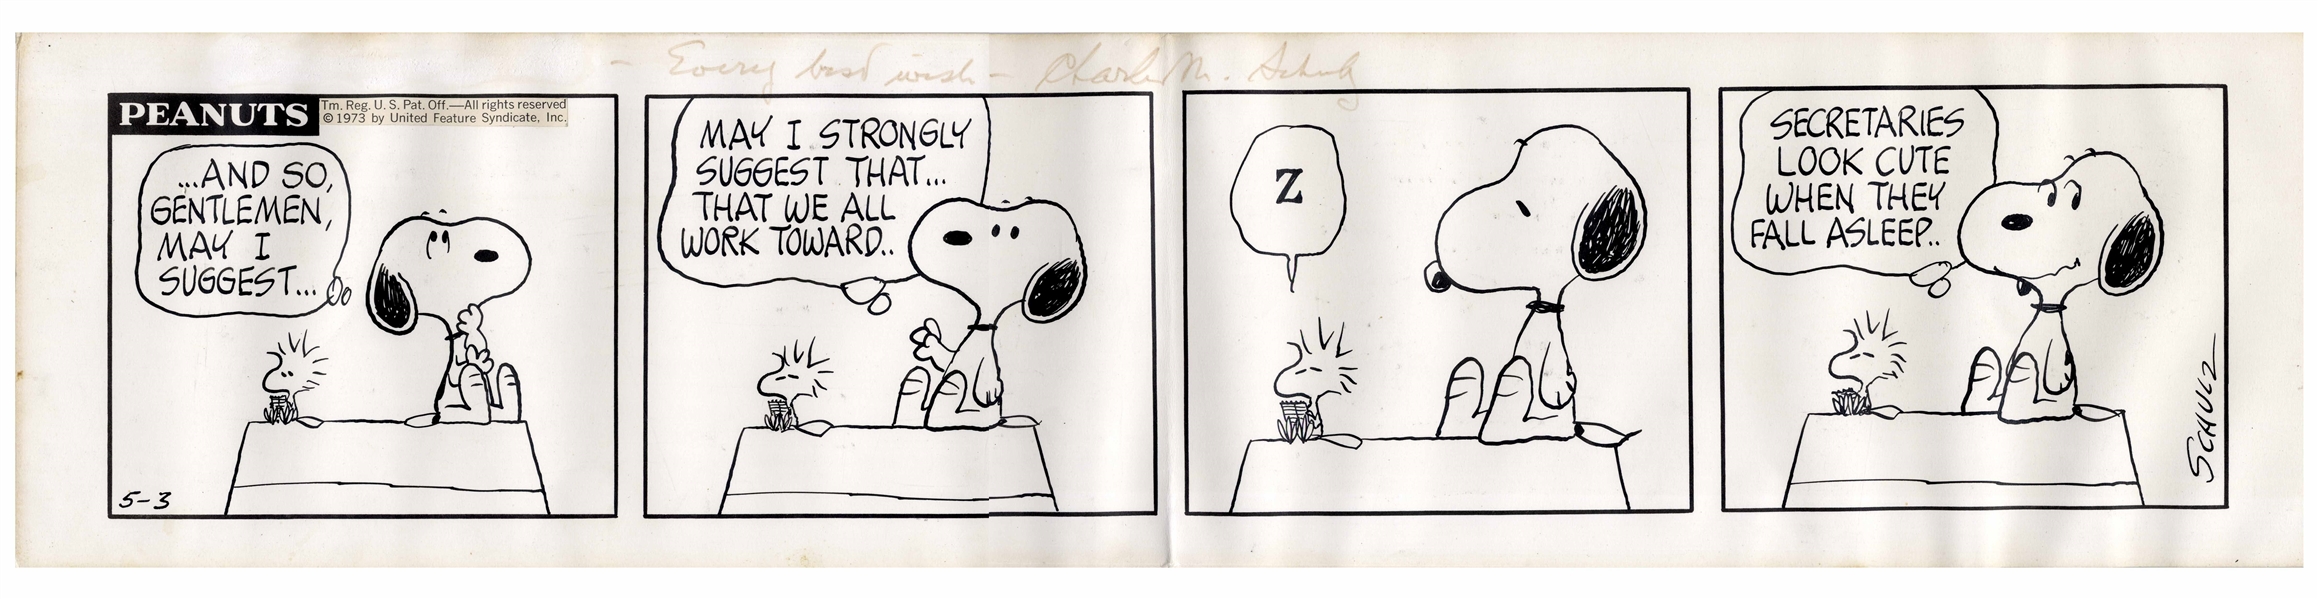 Charles Schulz Original Hand-Drawn ''Peanuts'' Comic Strip Featuring Snoopy & Woodstock as His Secretary